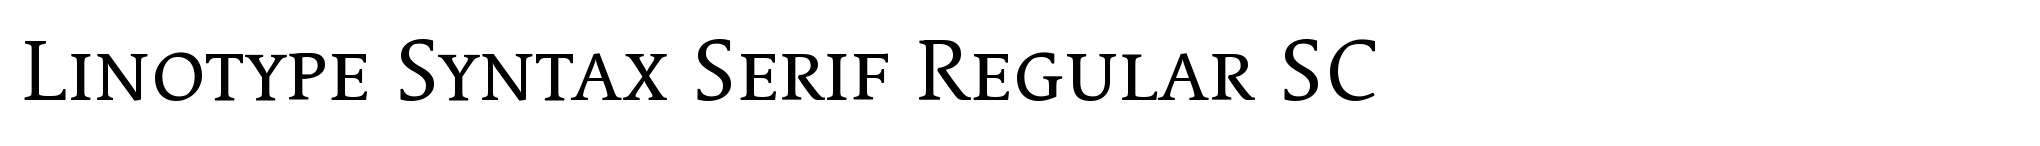 Linotype Syntax Serif Regular SC image